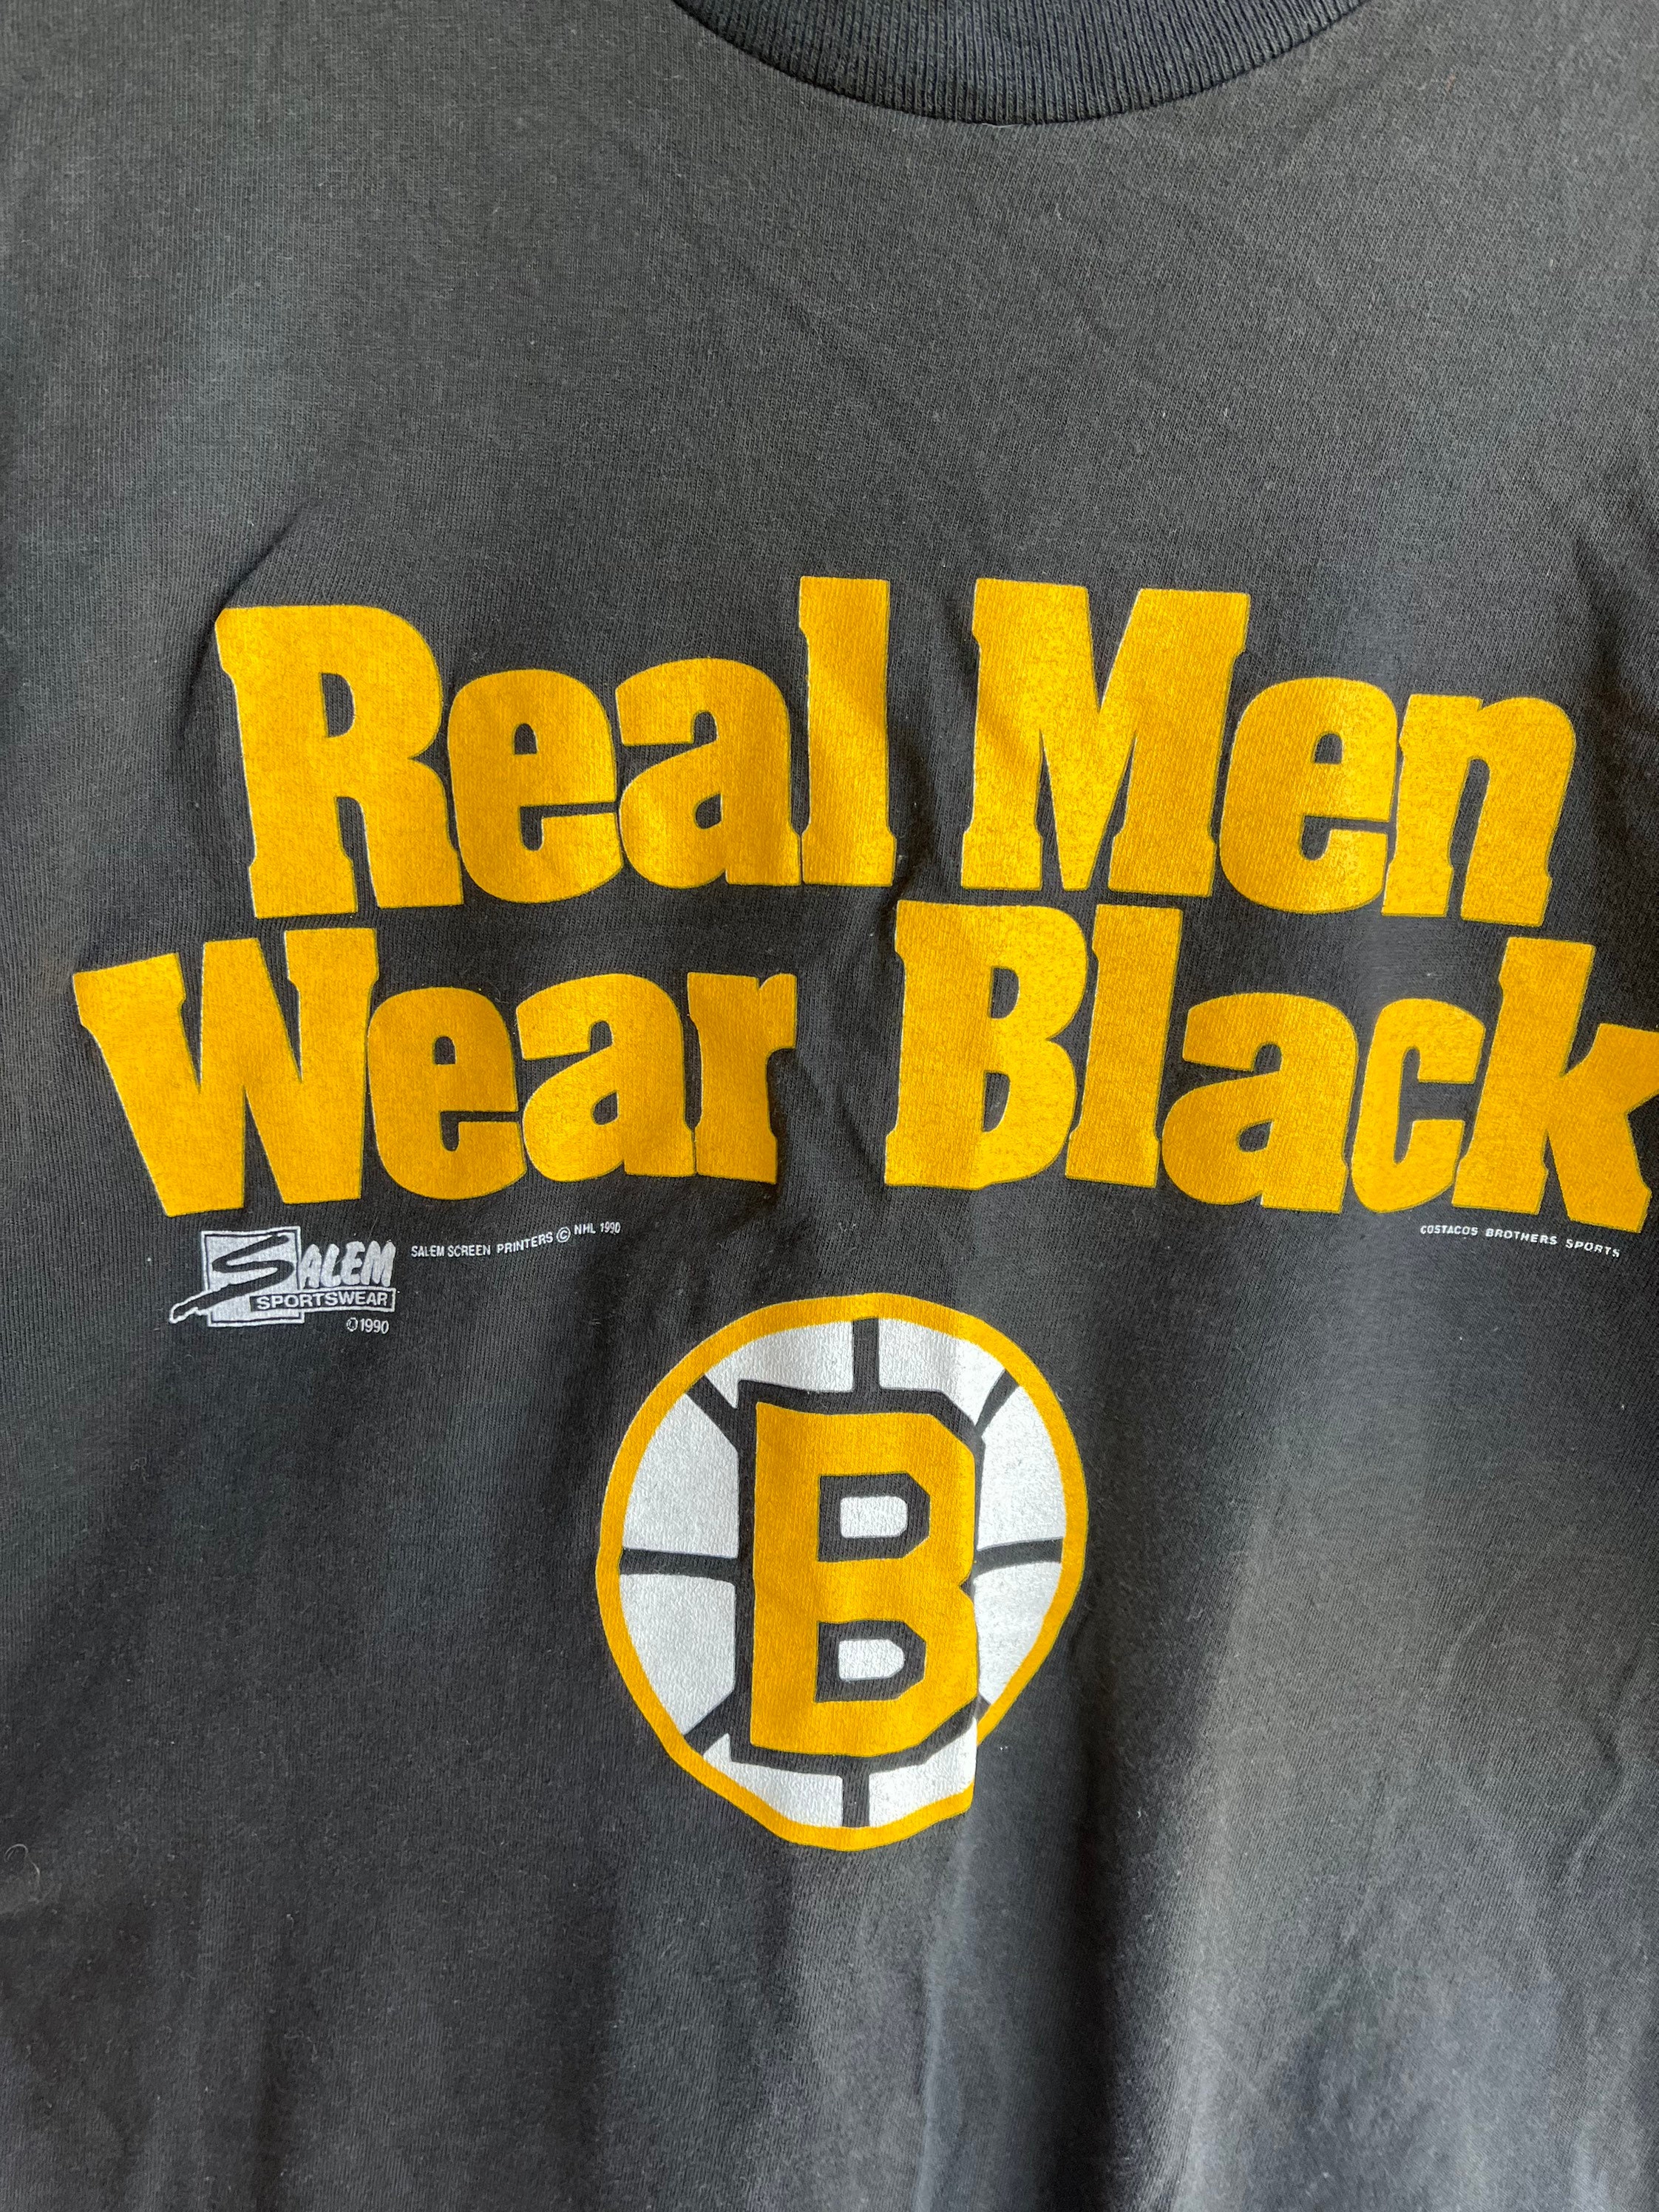 705Vintage Vintage Boston Bruins NHL Salem Sportswear T-Shirt